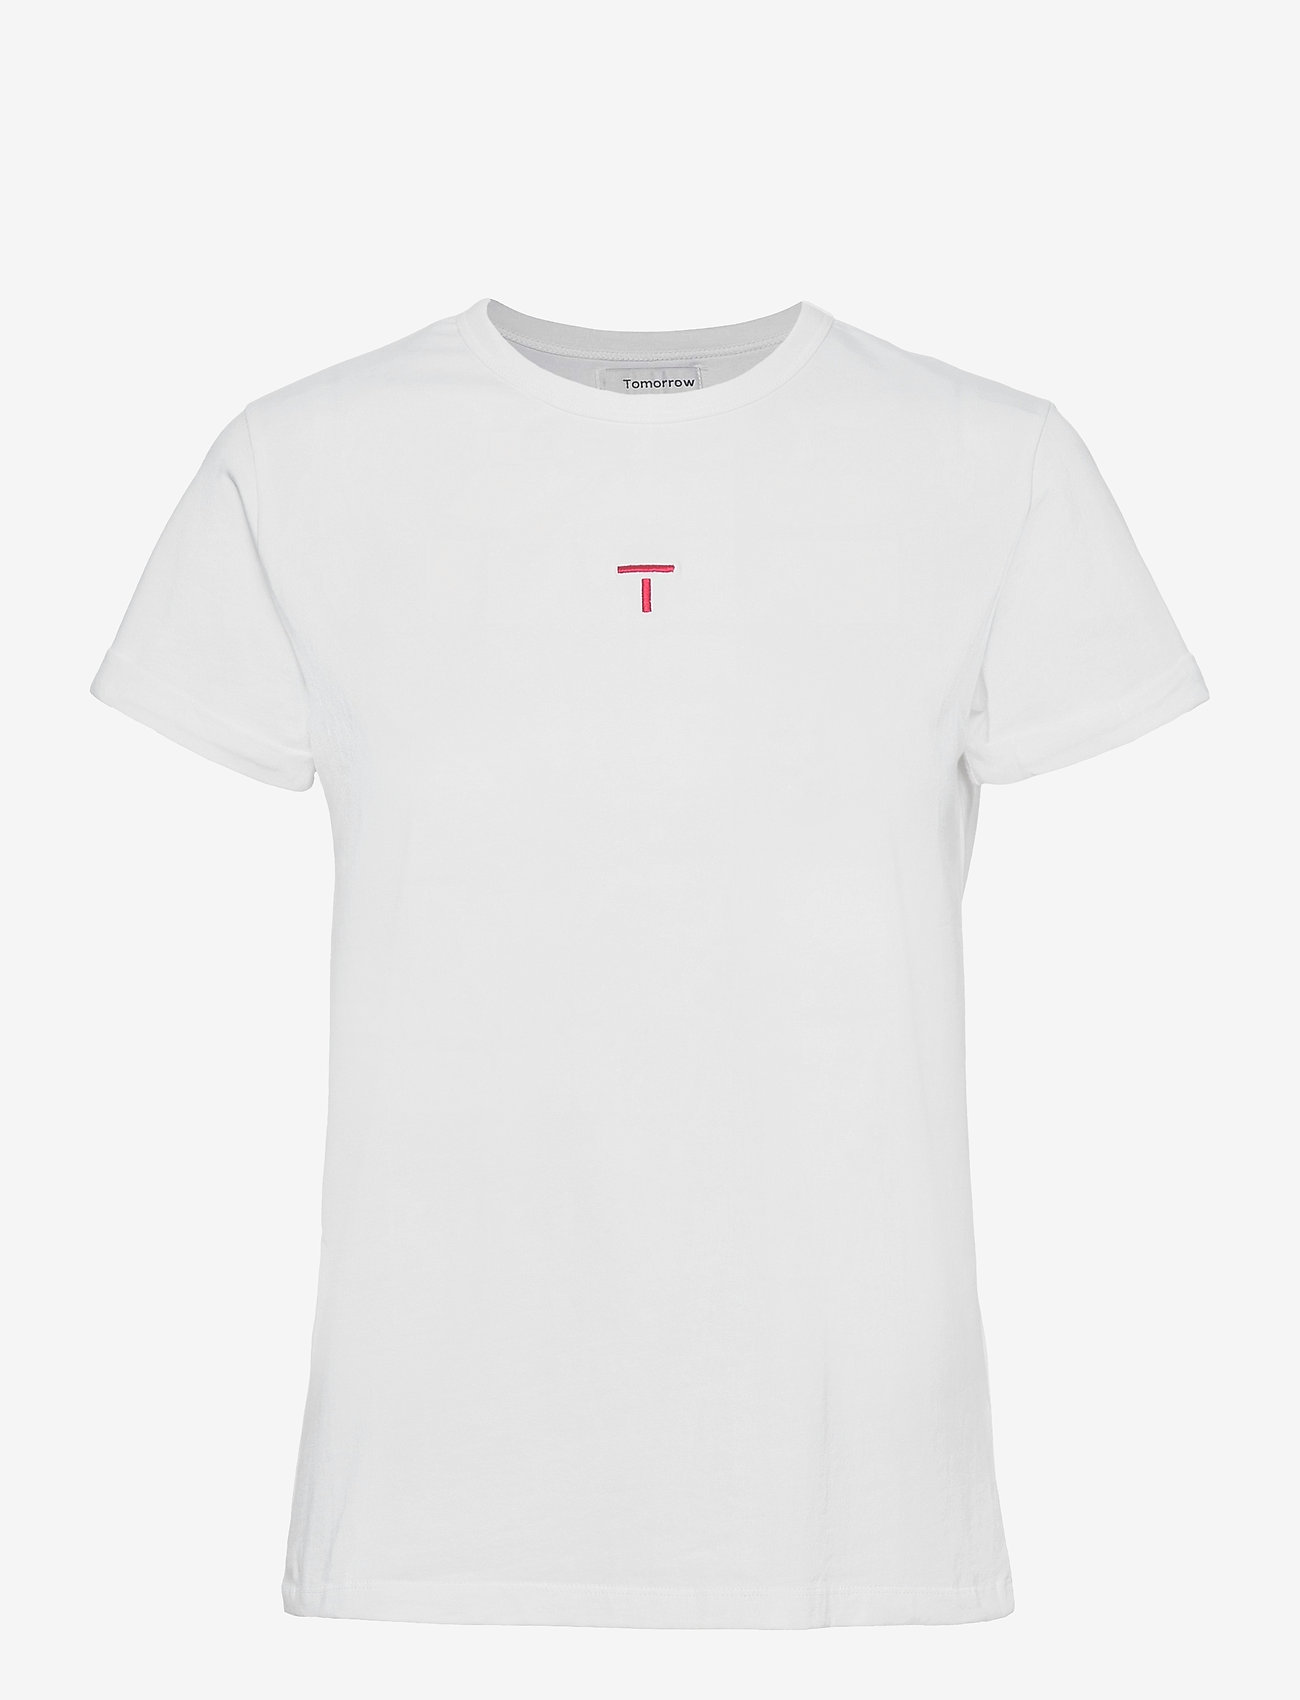 Tomorrow - Logo tee NO. 4 - t-shirts & tops - white - 0